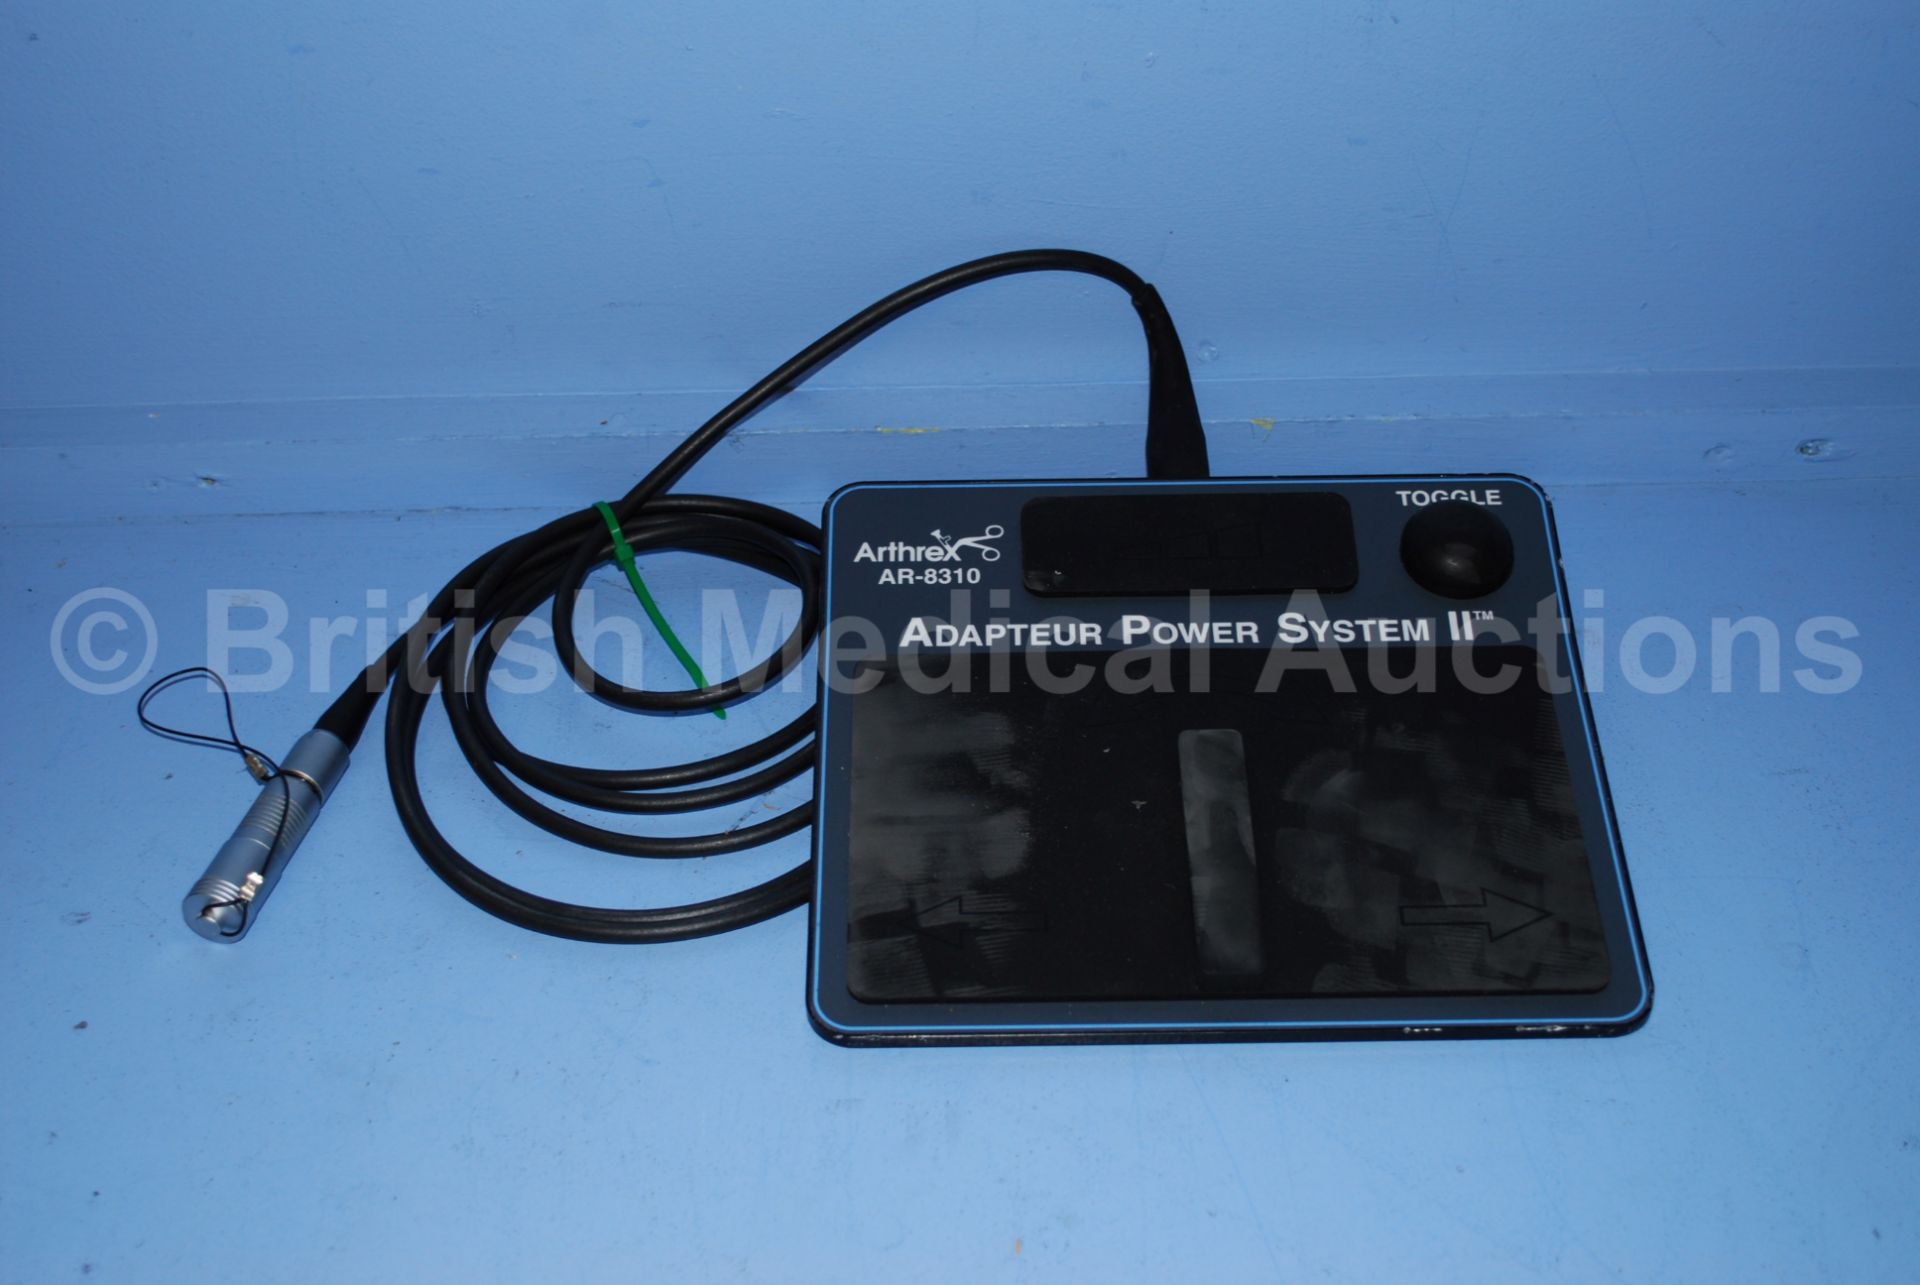 Arthrex AR-8310 Adapteur Power System II Footswitc - Image 2 of 2